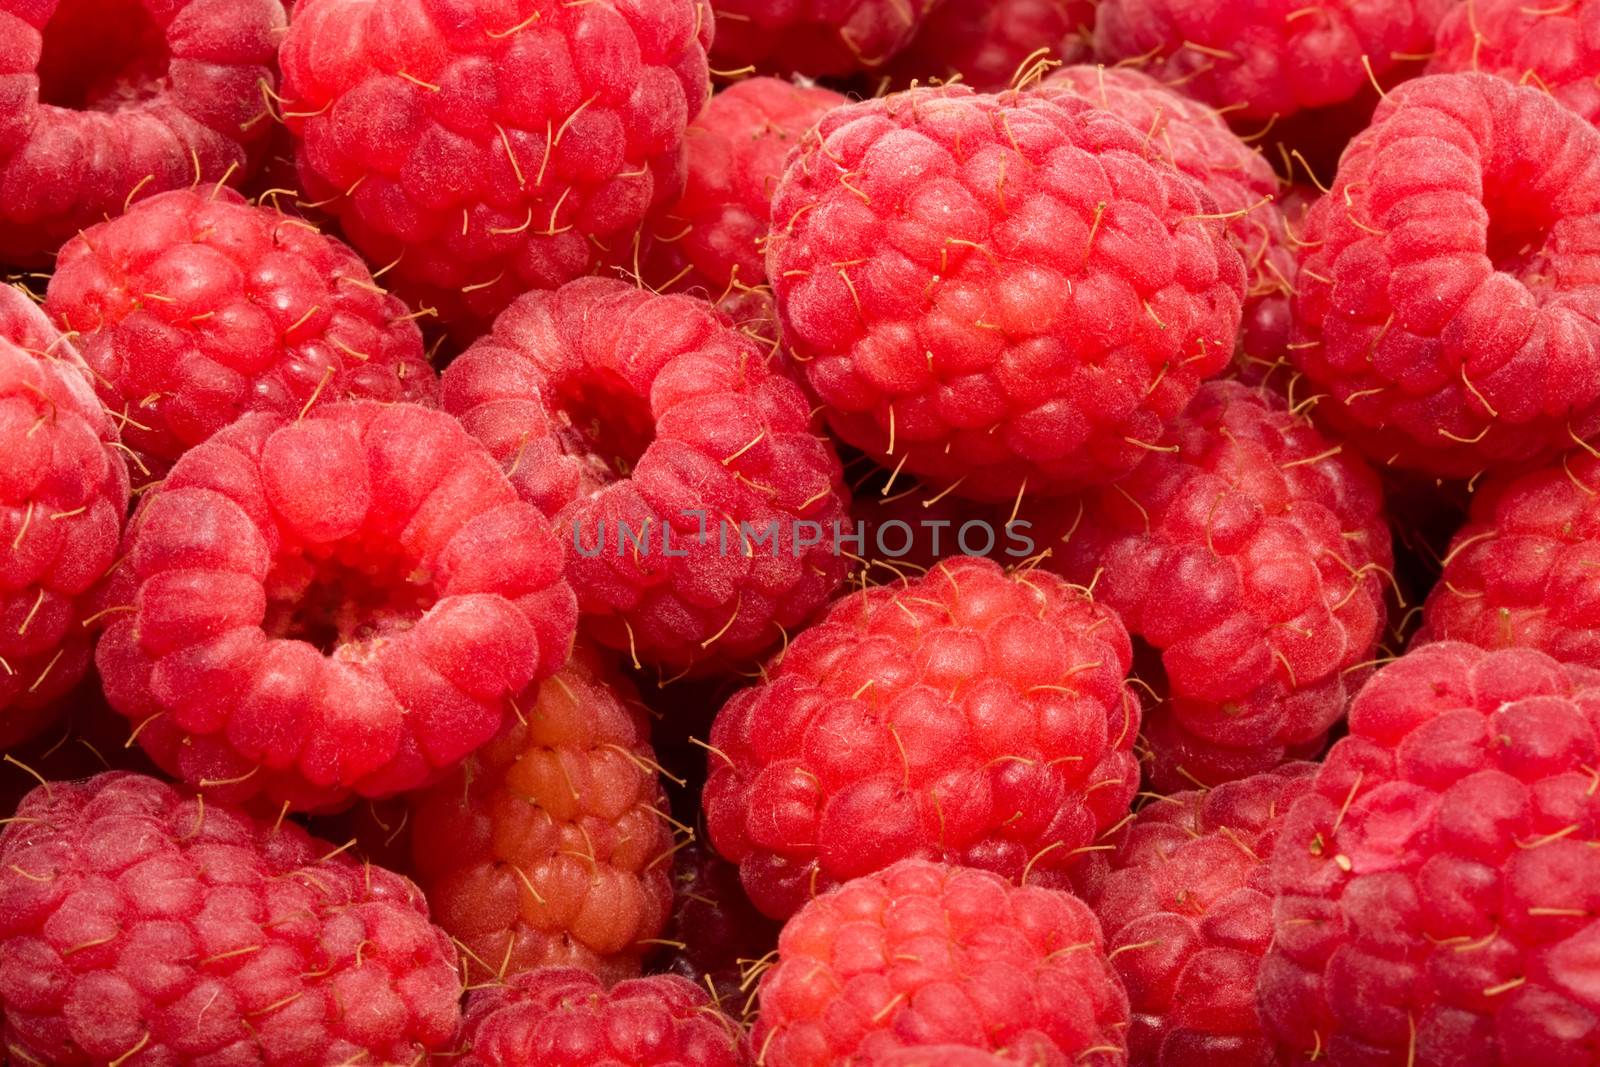 Raspberries by sailorr